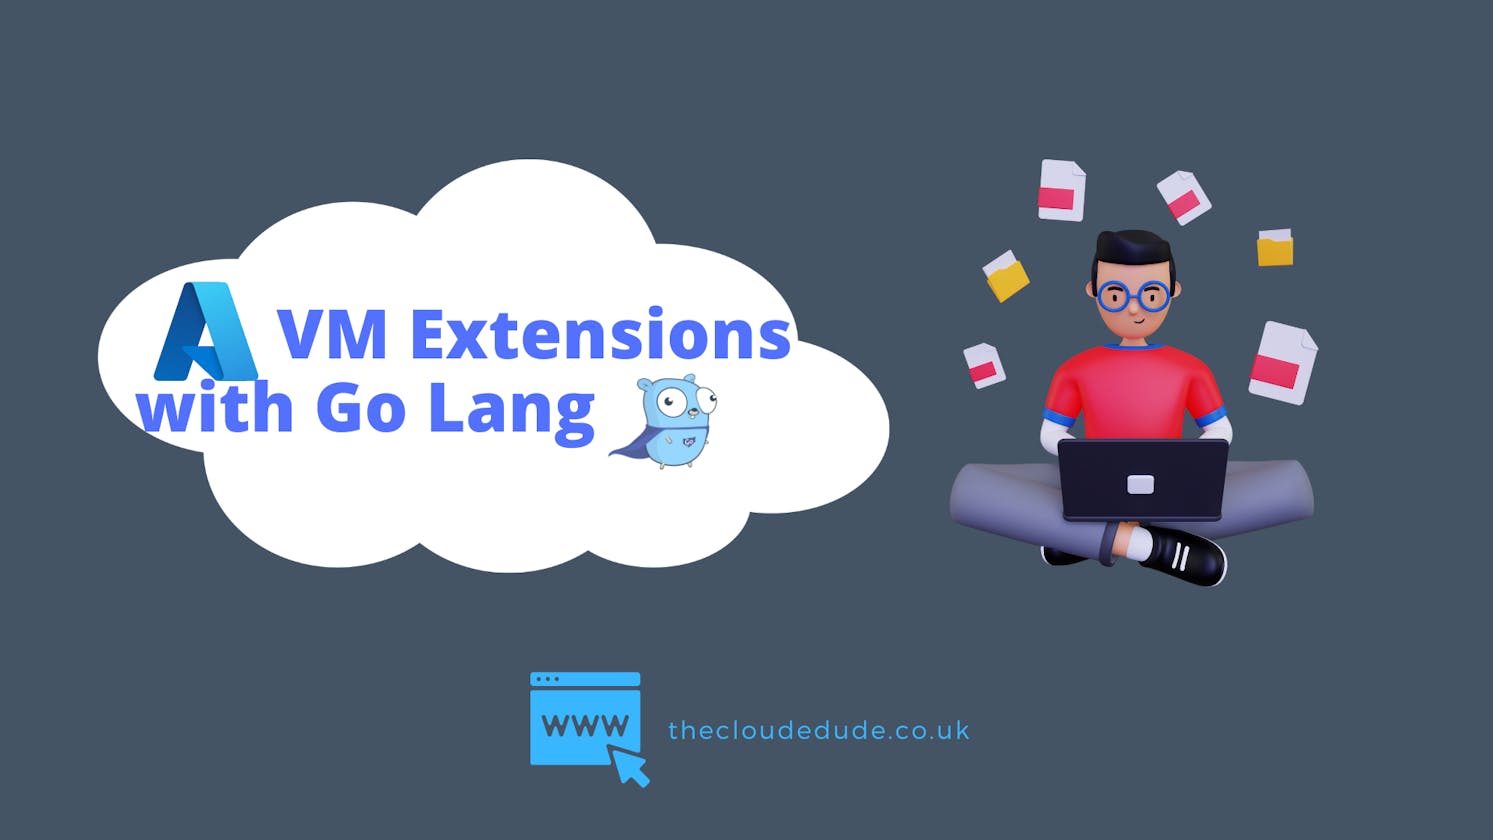 Azure VM Extensions, written in Go